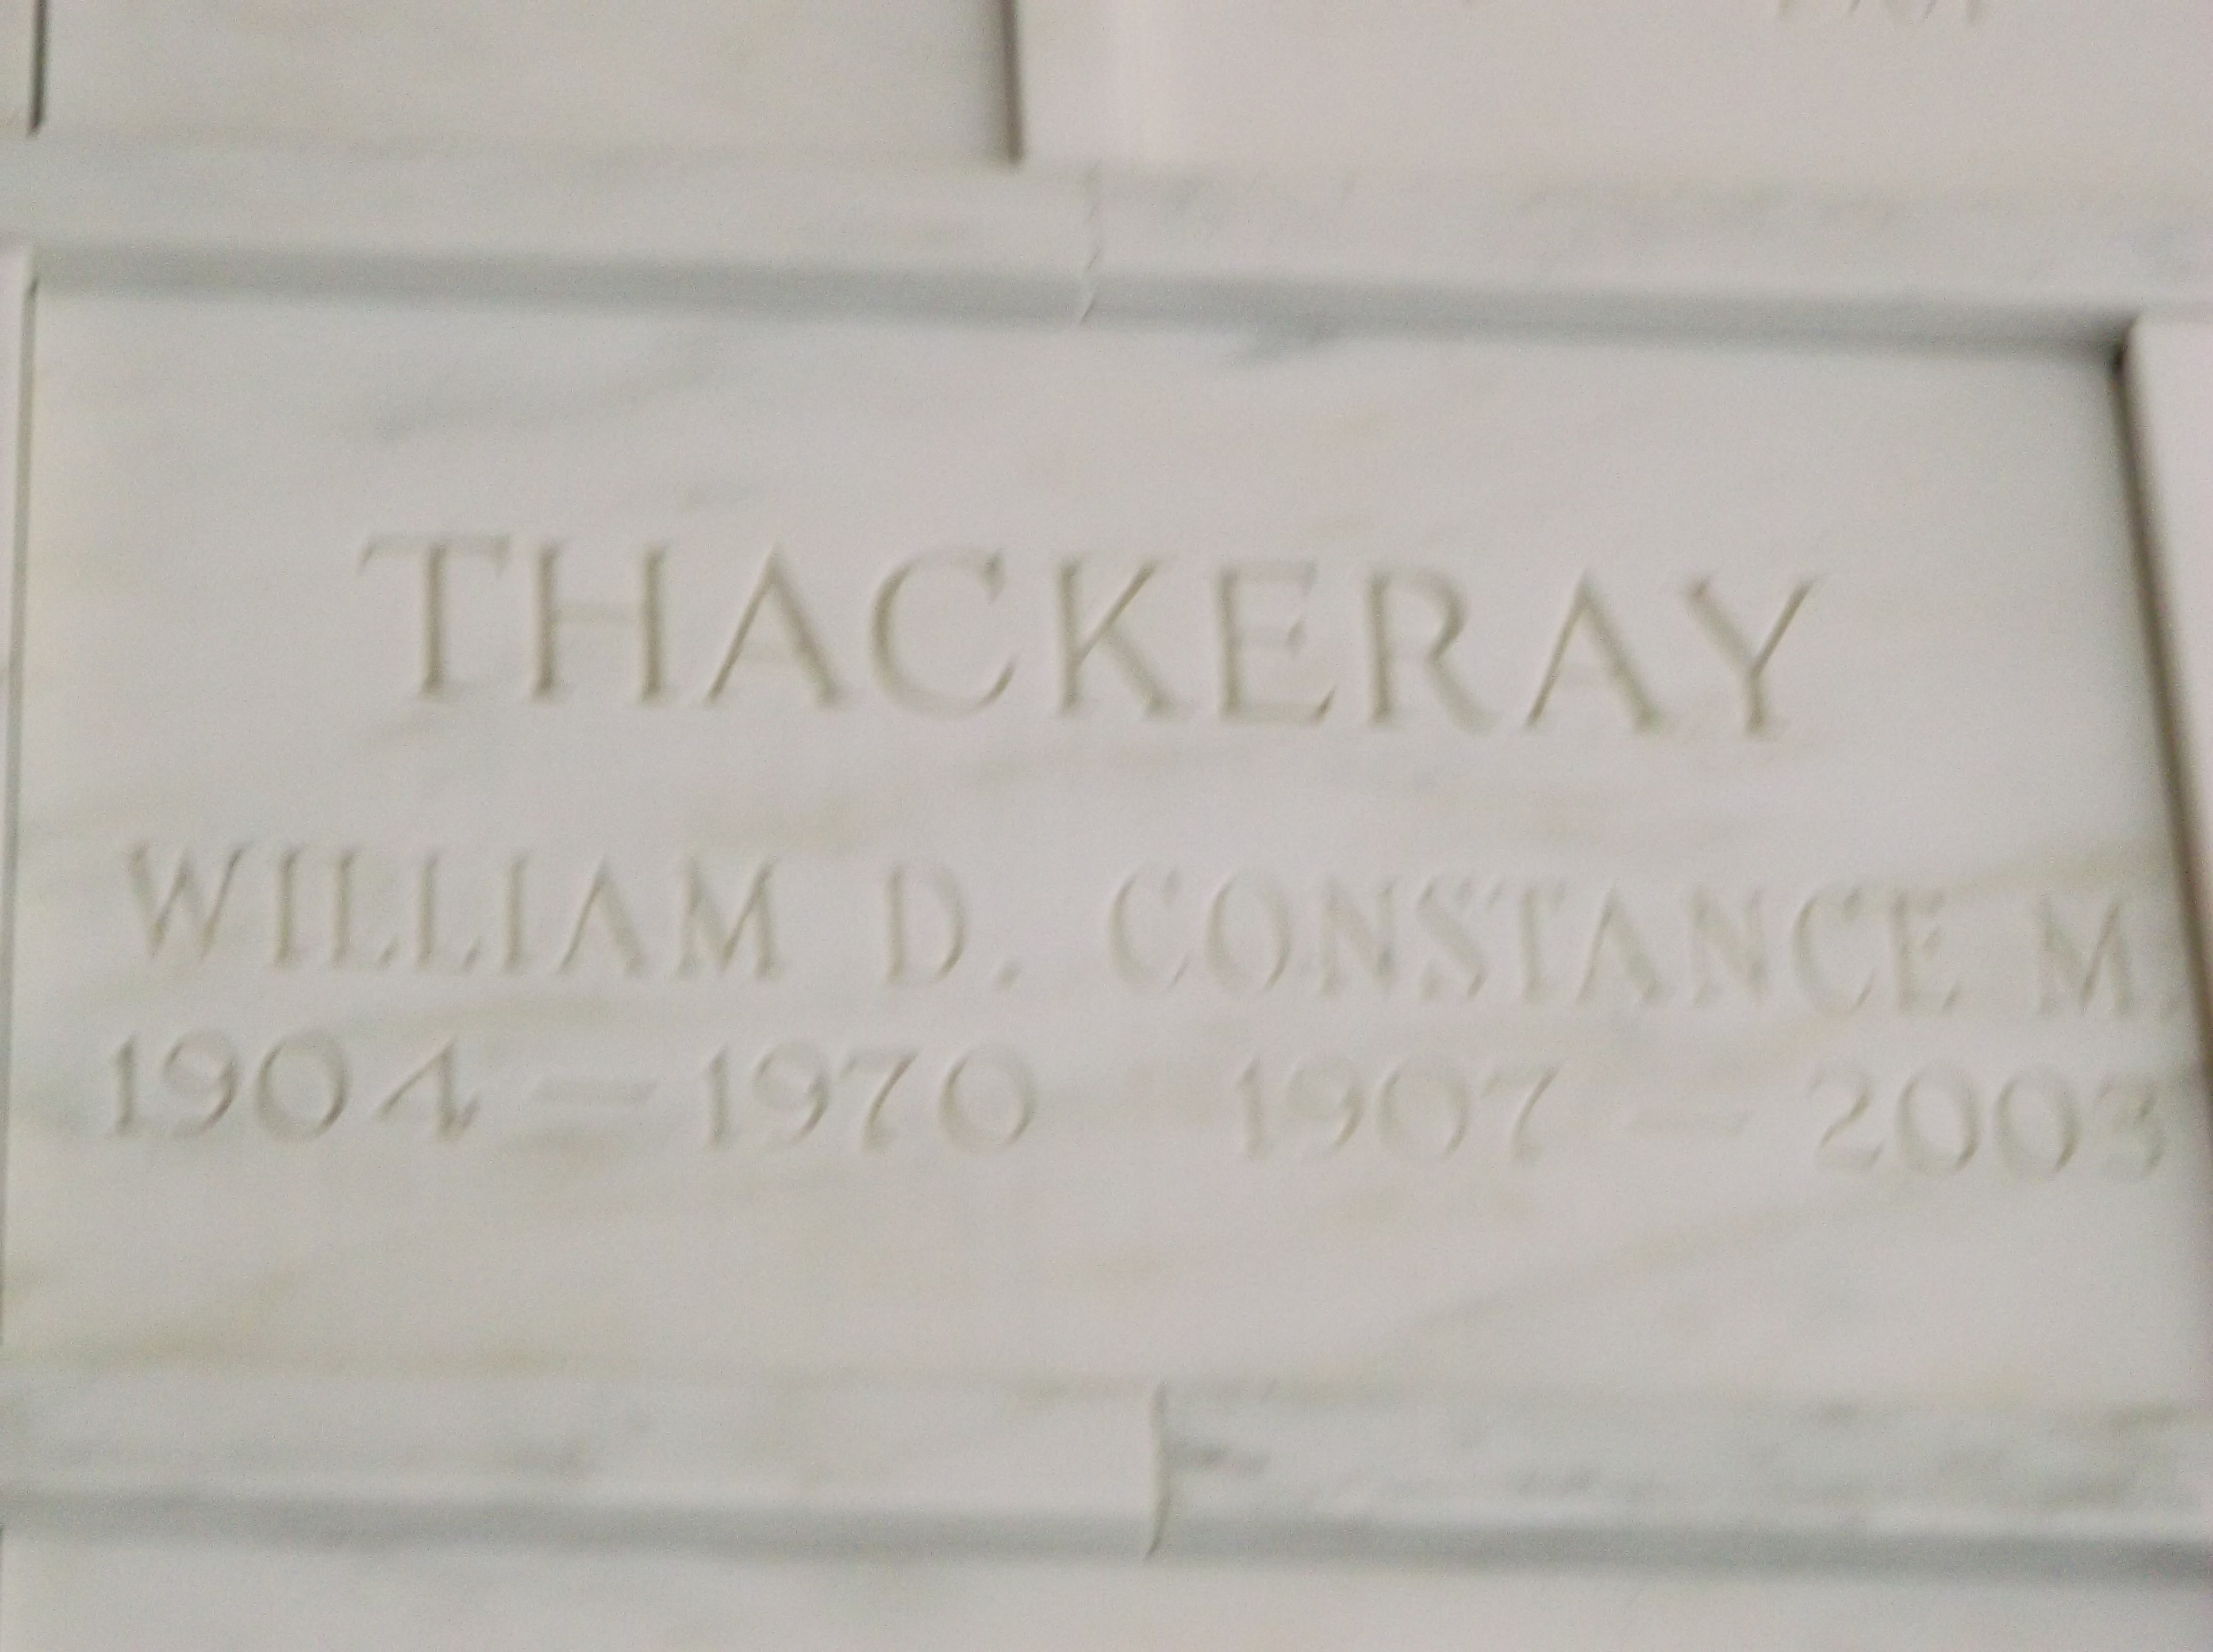 William D Thackeray